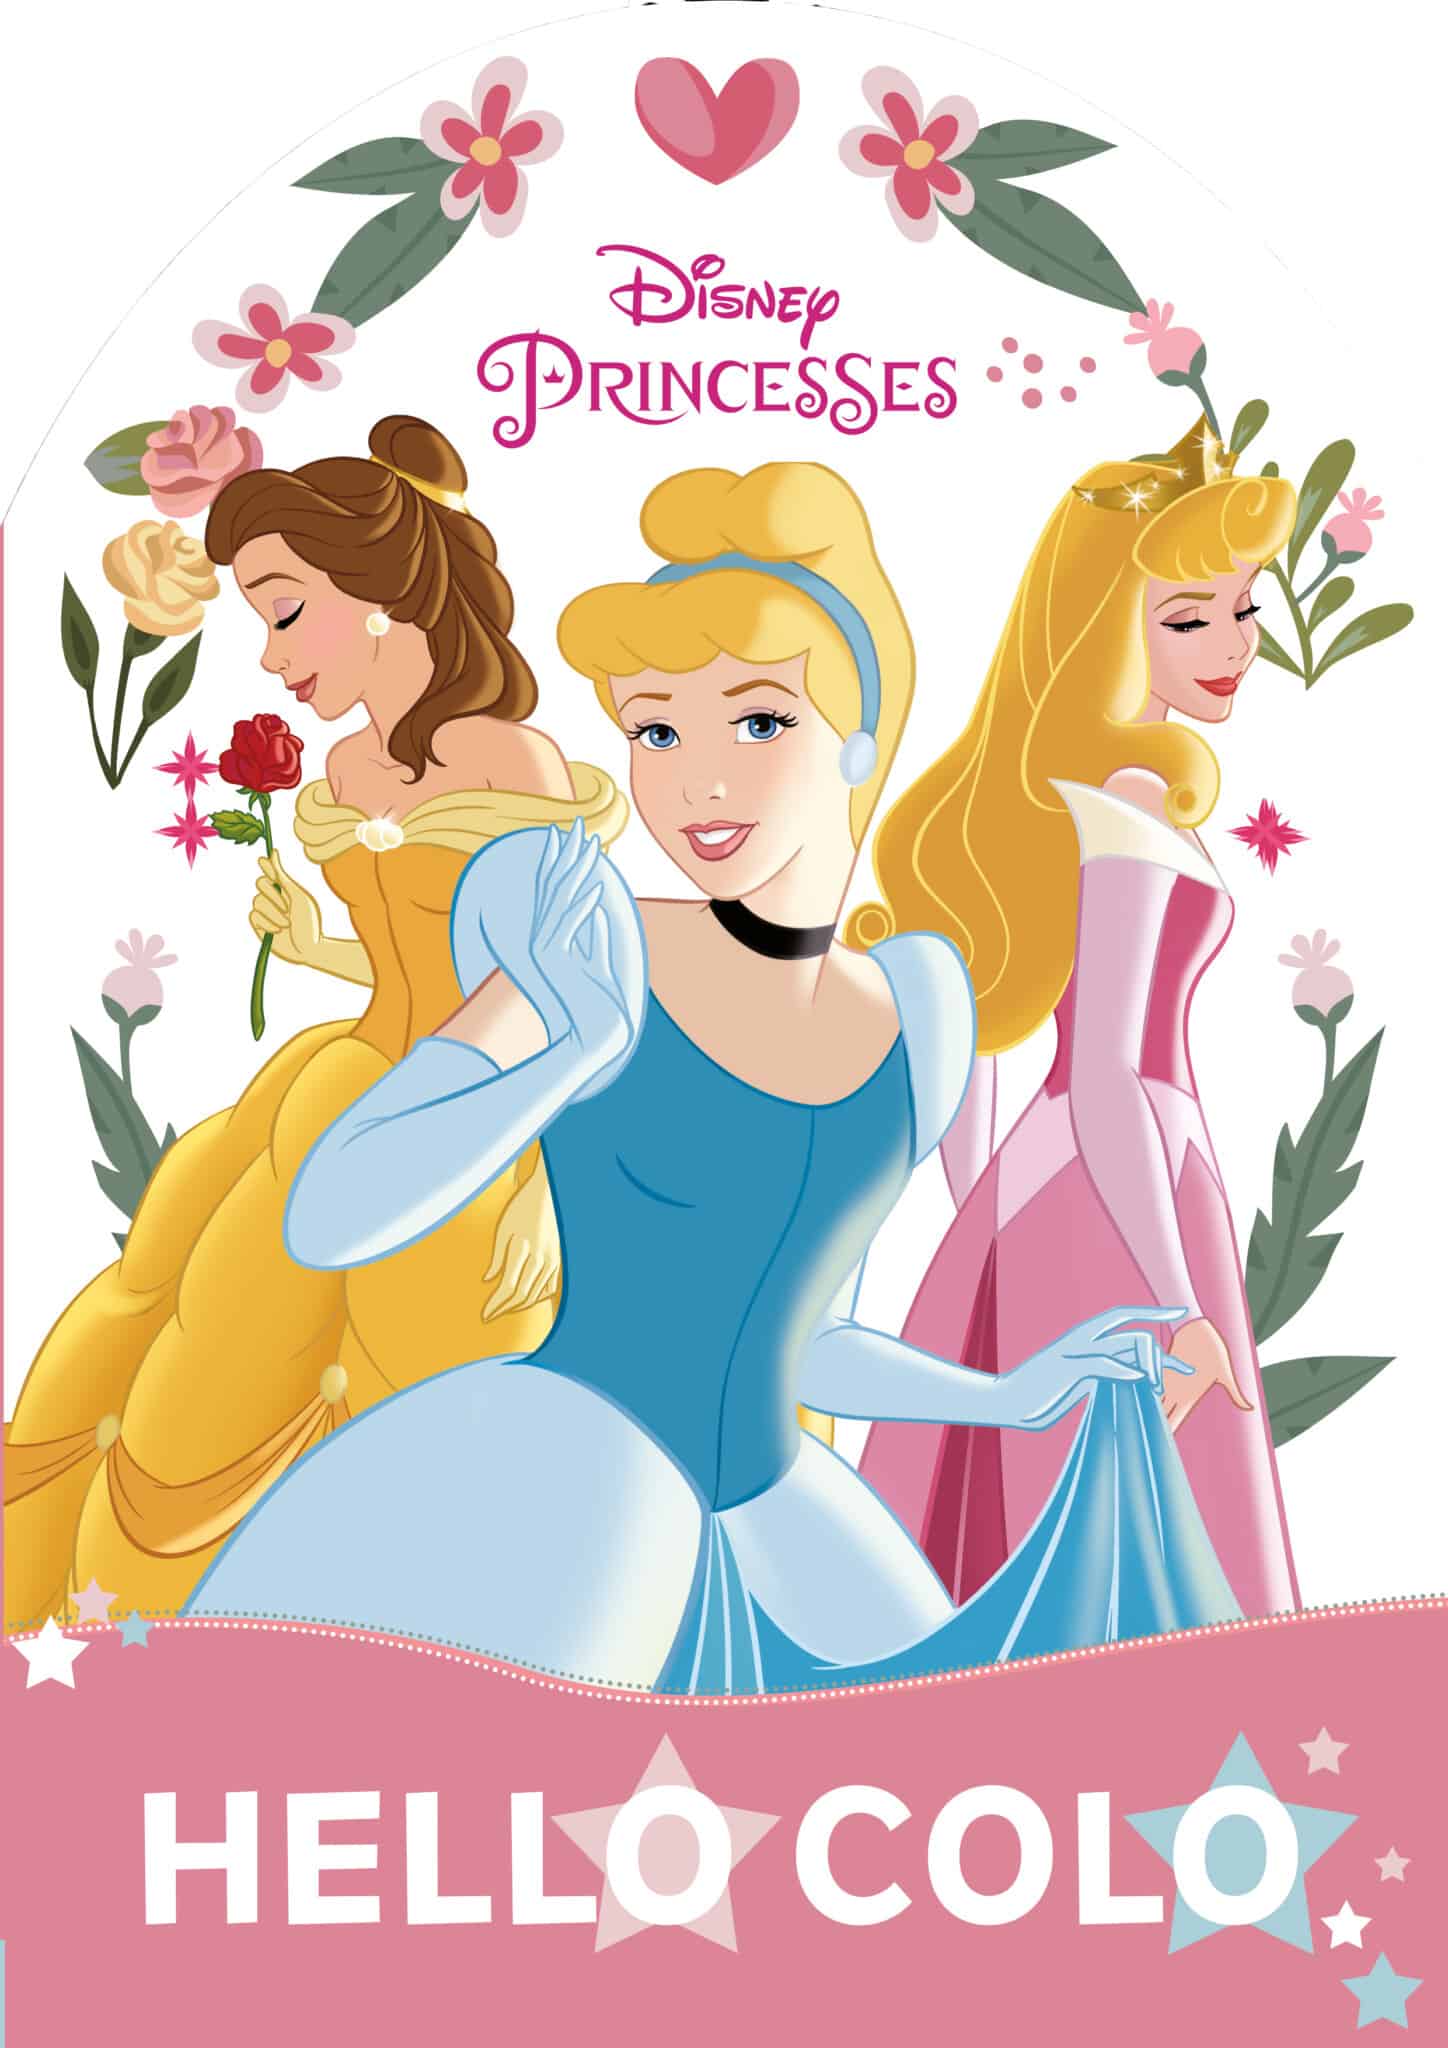 Hello colo : Disney Princesses N°2